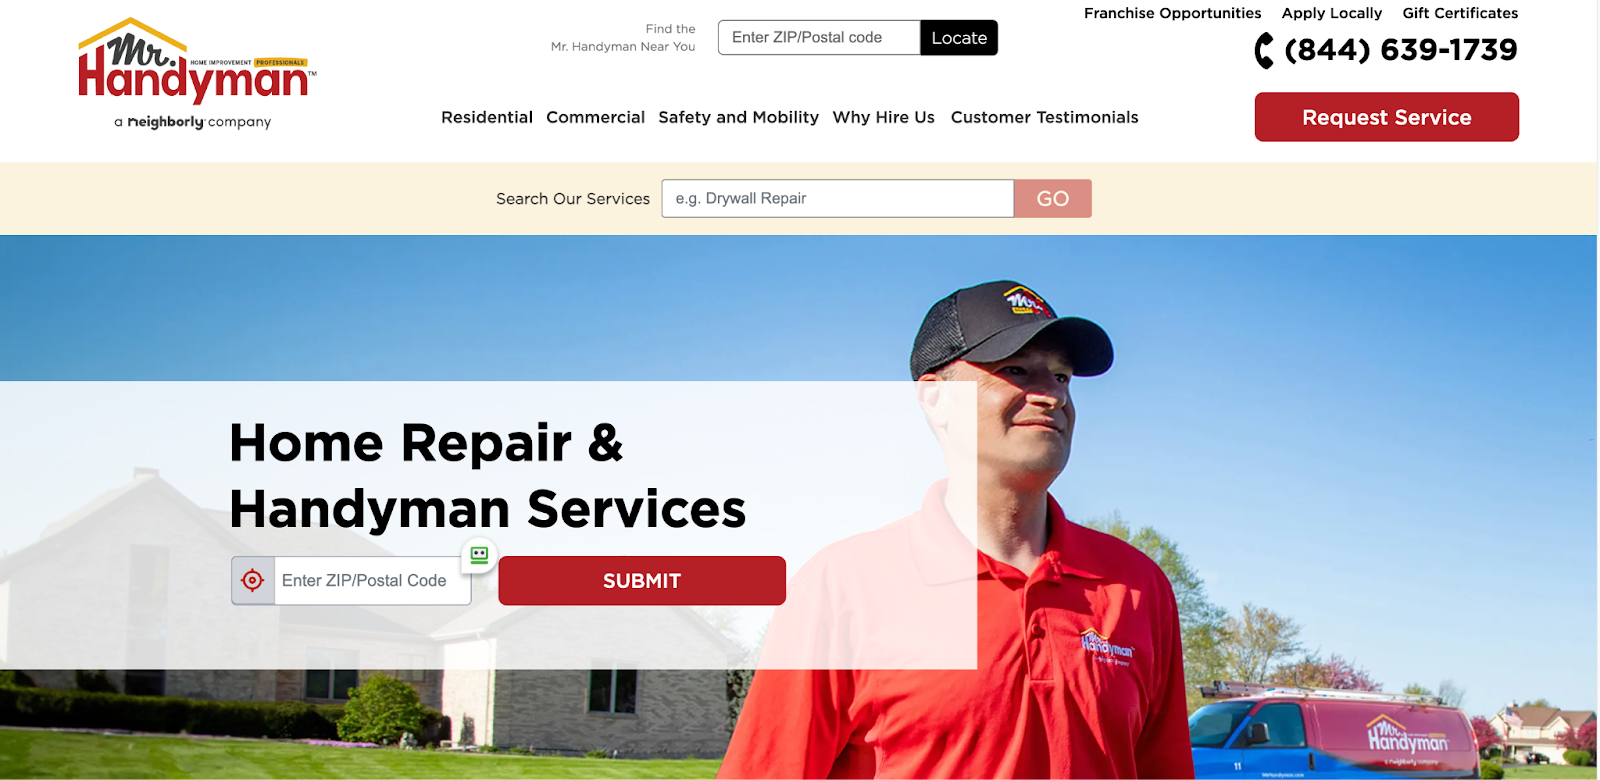 Mr. Handyman’ home service app 